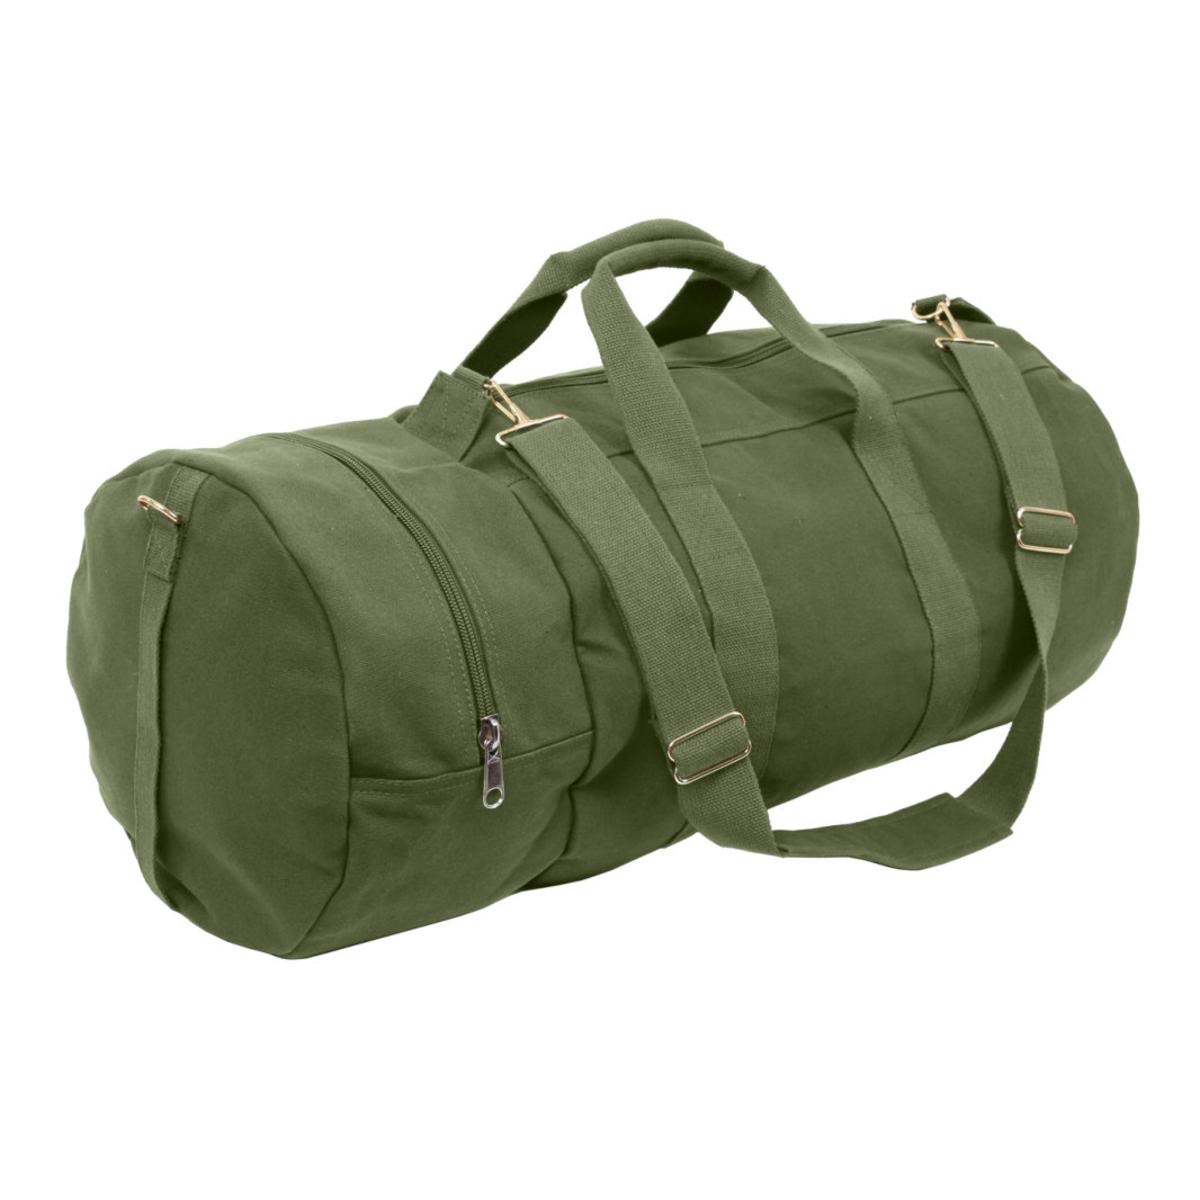 Rothco Canvas Double-Ender Sports Bag, Duffle Bag, w/Shoulder Strap | eBay